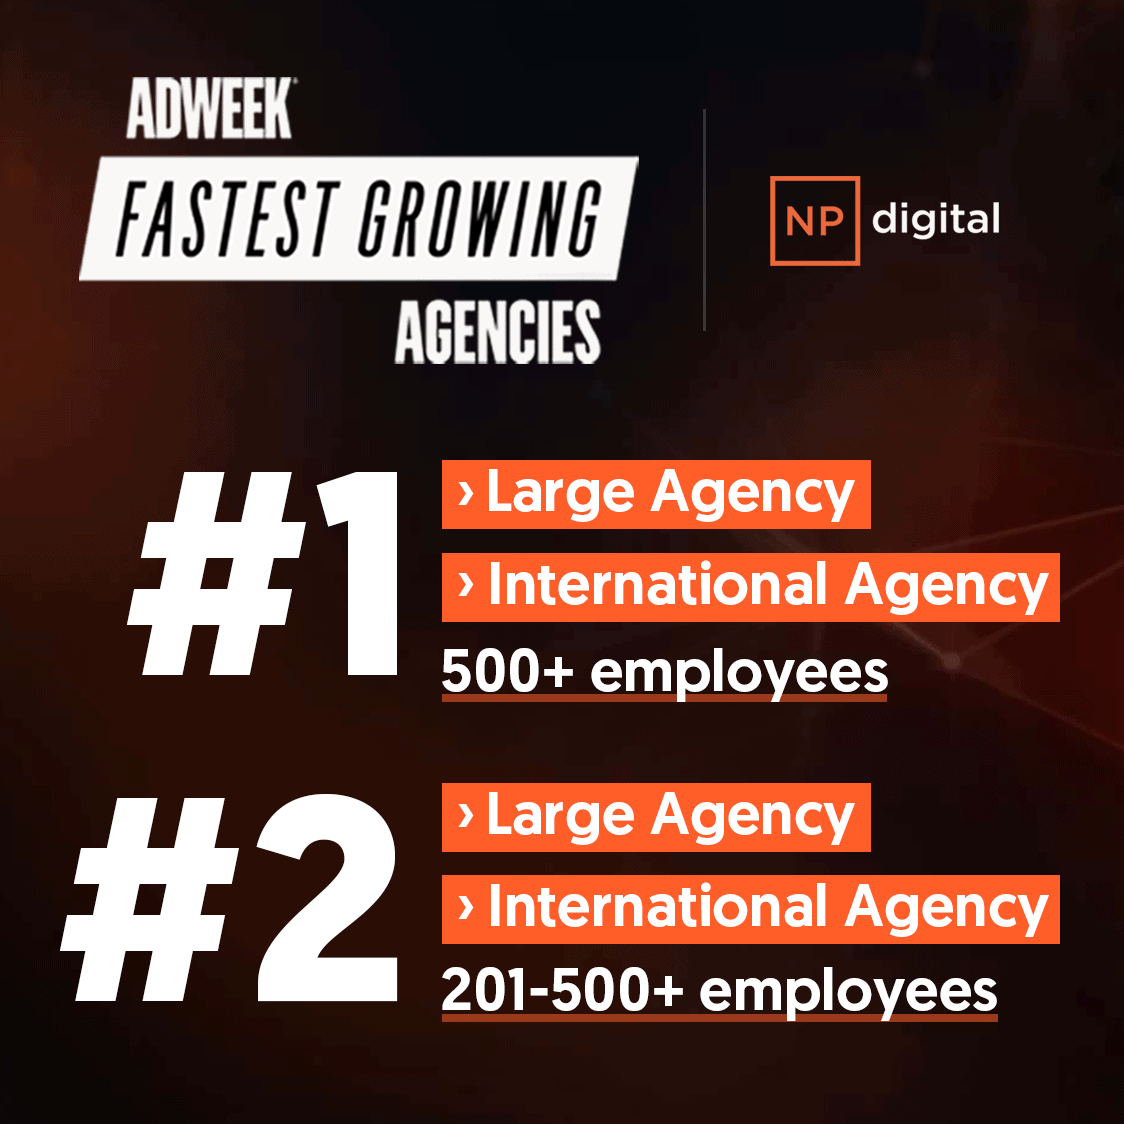 Rapid International Growth Lands NP Digital on Adweek's Fastest Growing